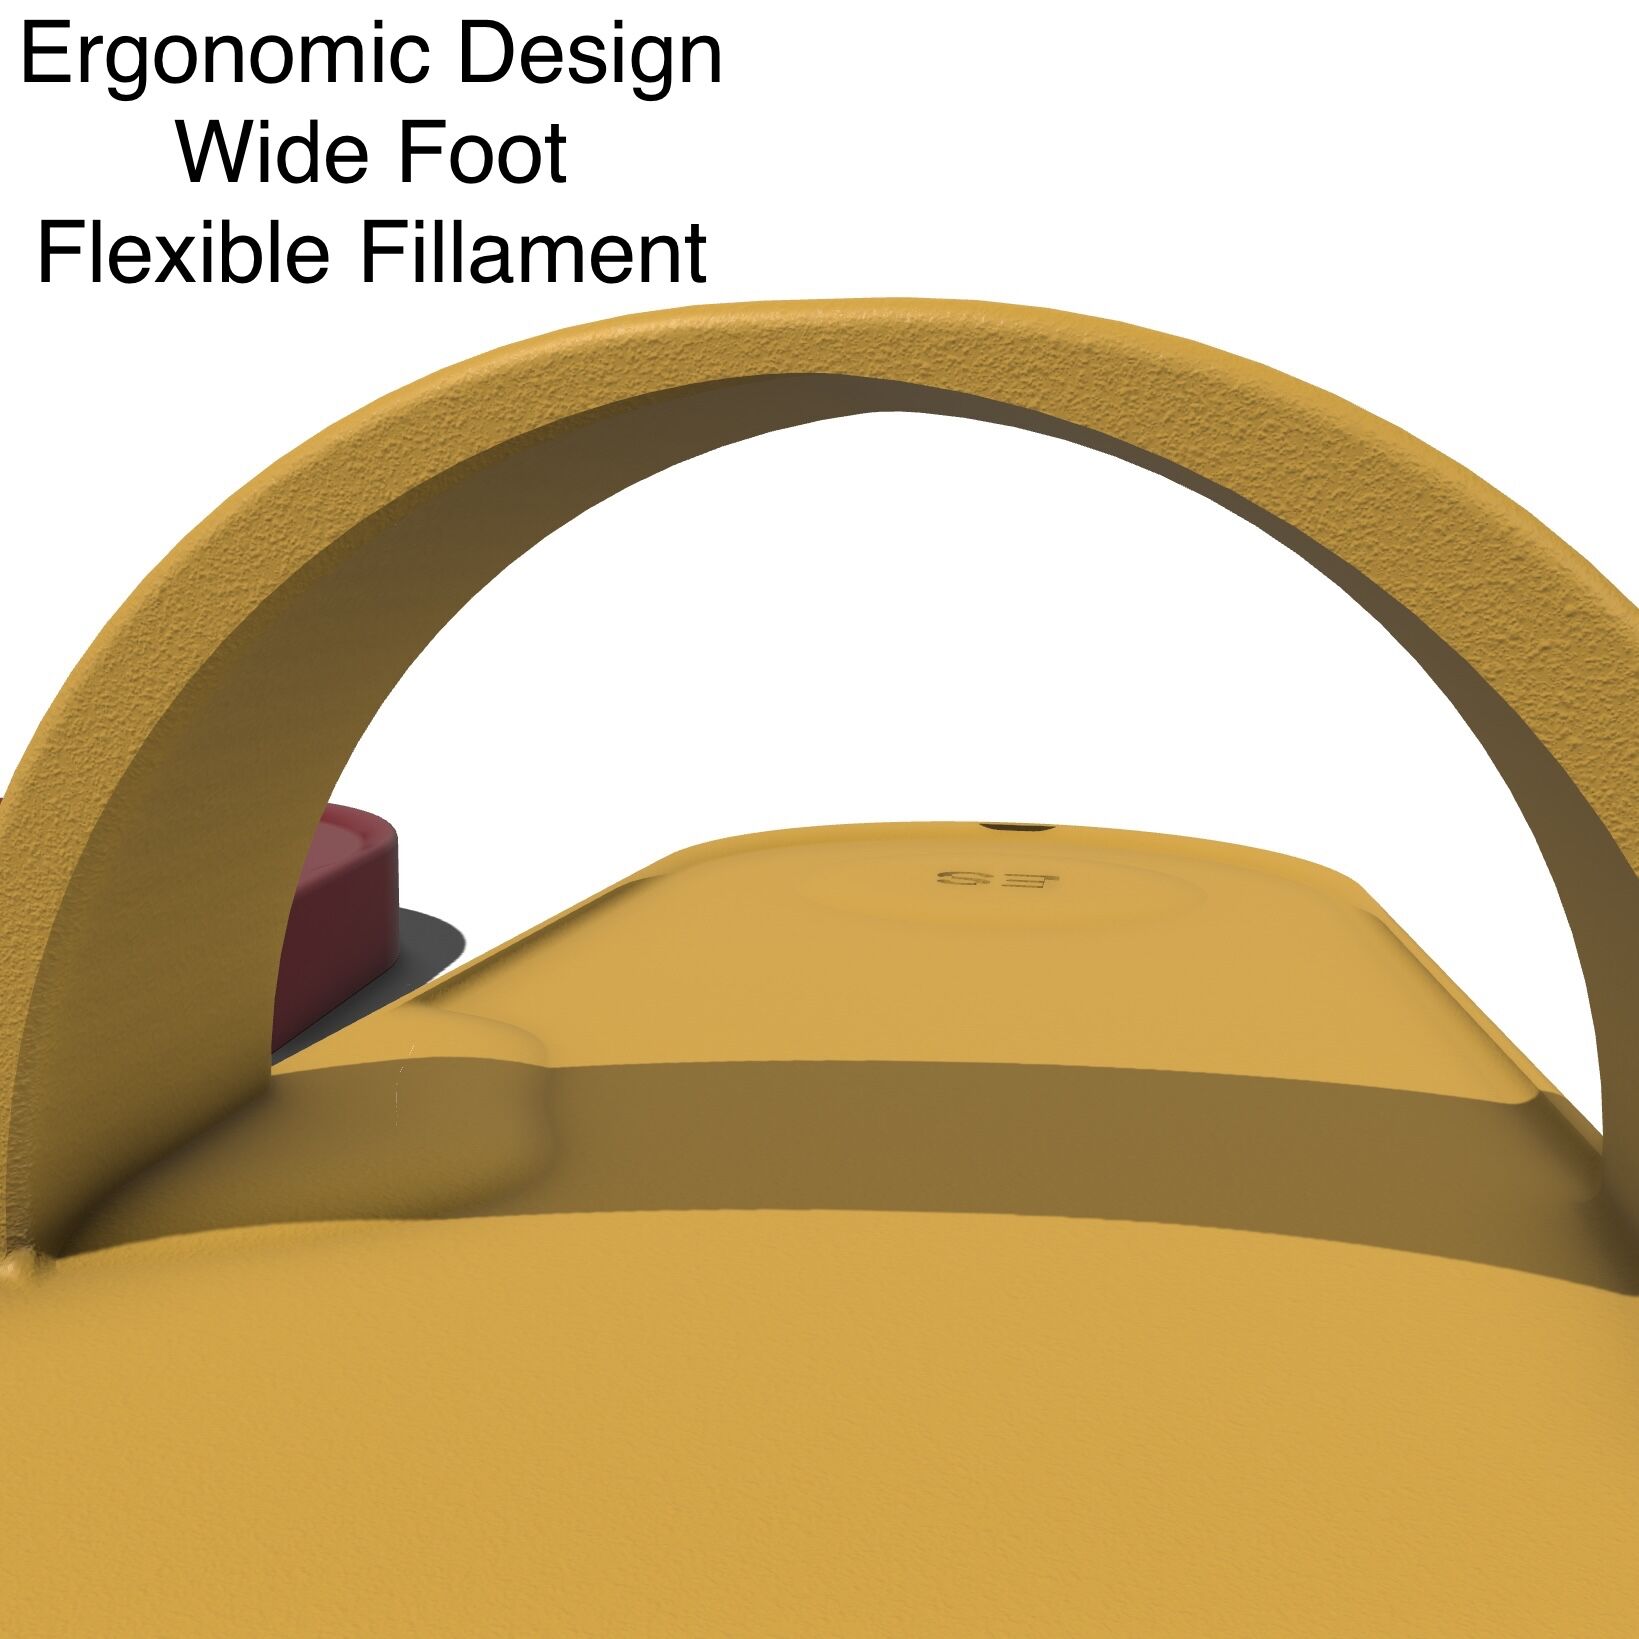 Wide Slipper with ergonomic design